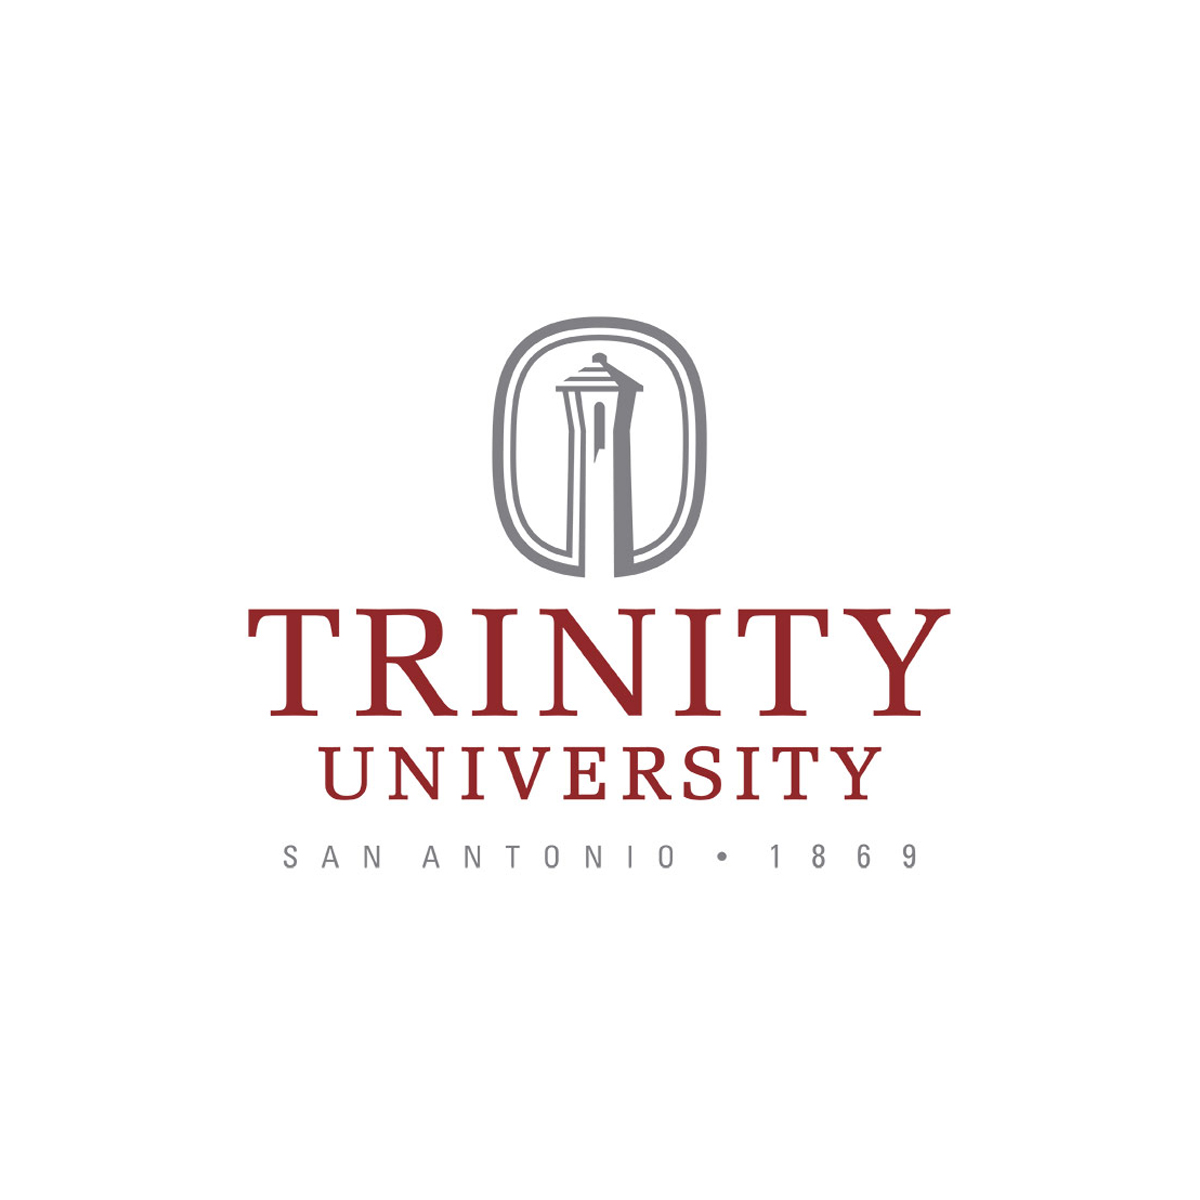 Trinity University - San Antonio featured logo